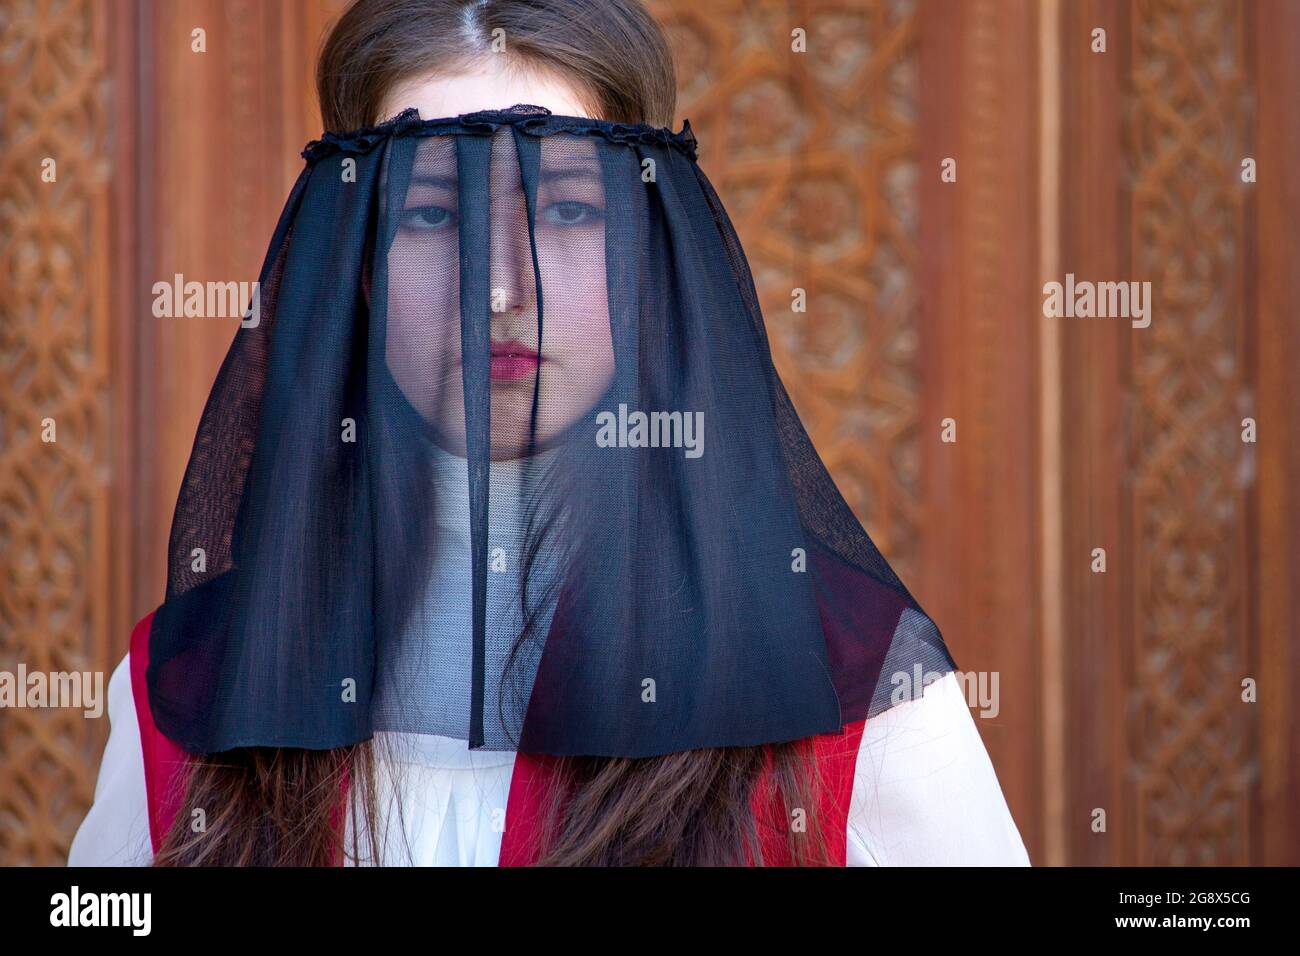 Ritratto di donna uzbeka con velo sul viso a Tashkent, Uzbekistan Foto Stock